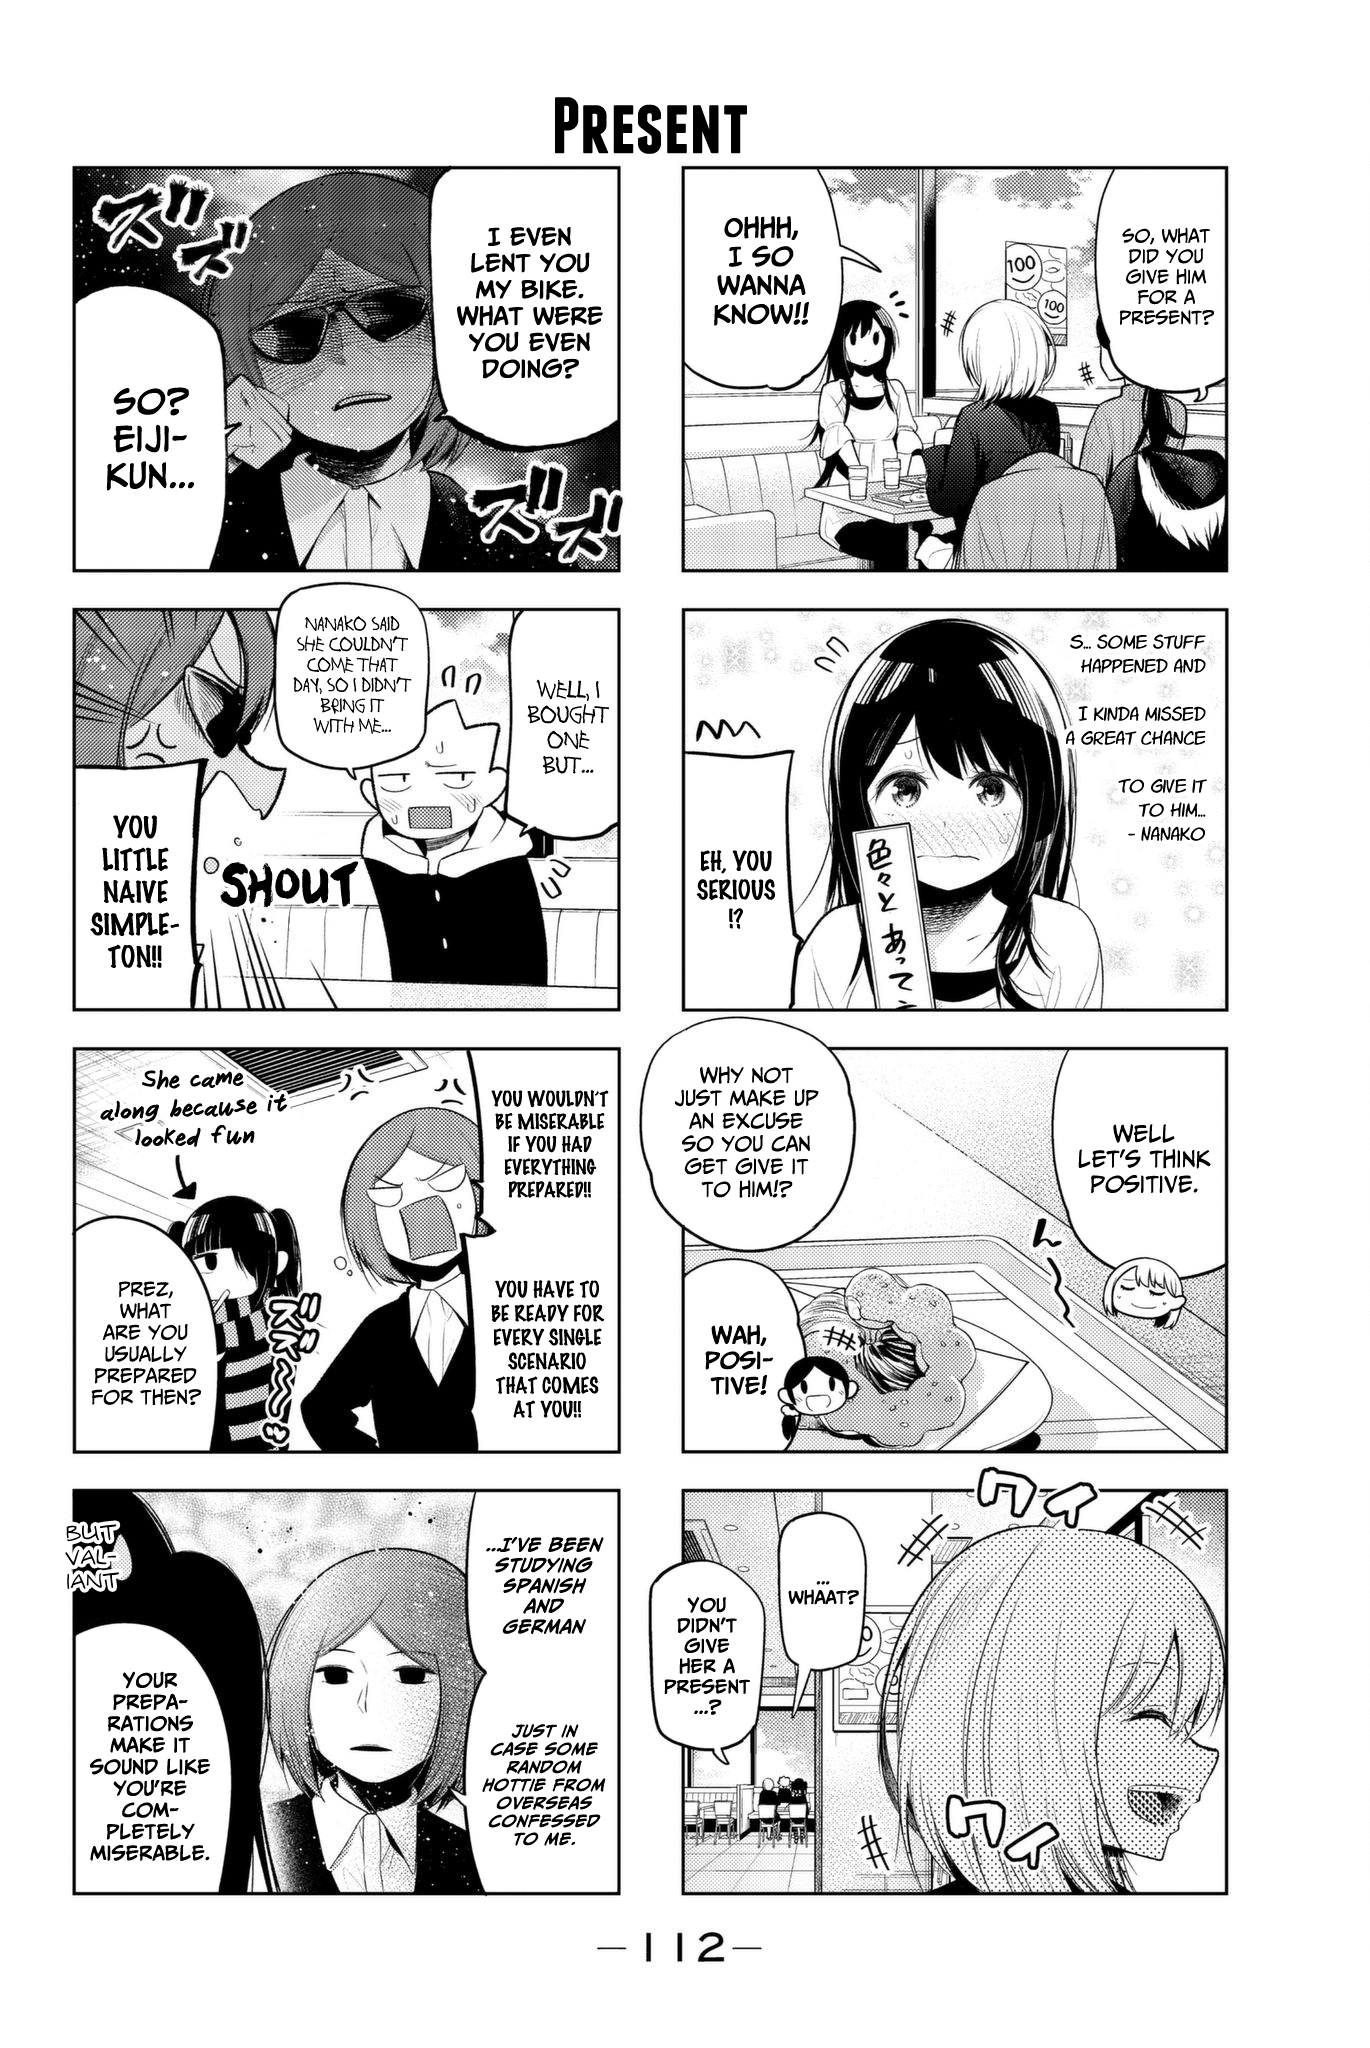 Senryuu Shoujo Vol.7 Chapter 105: Nanako and girls talk